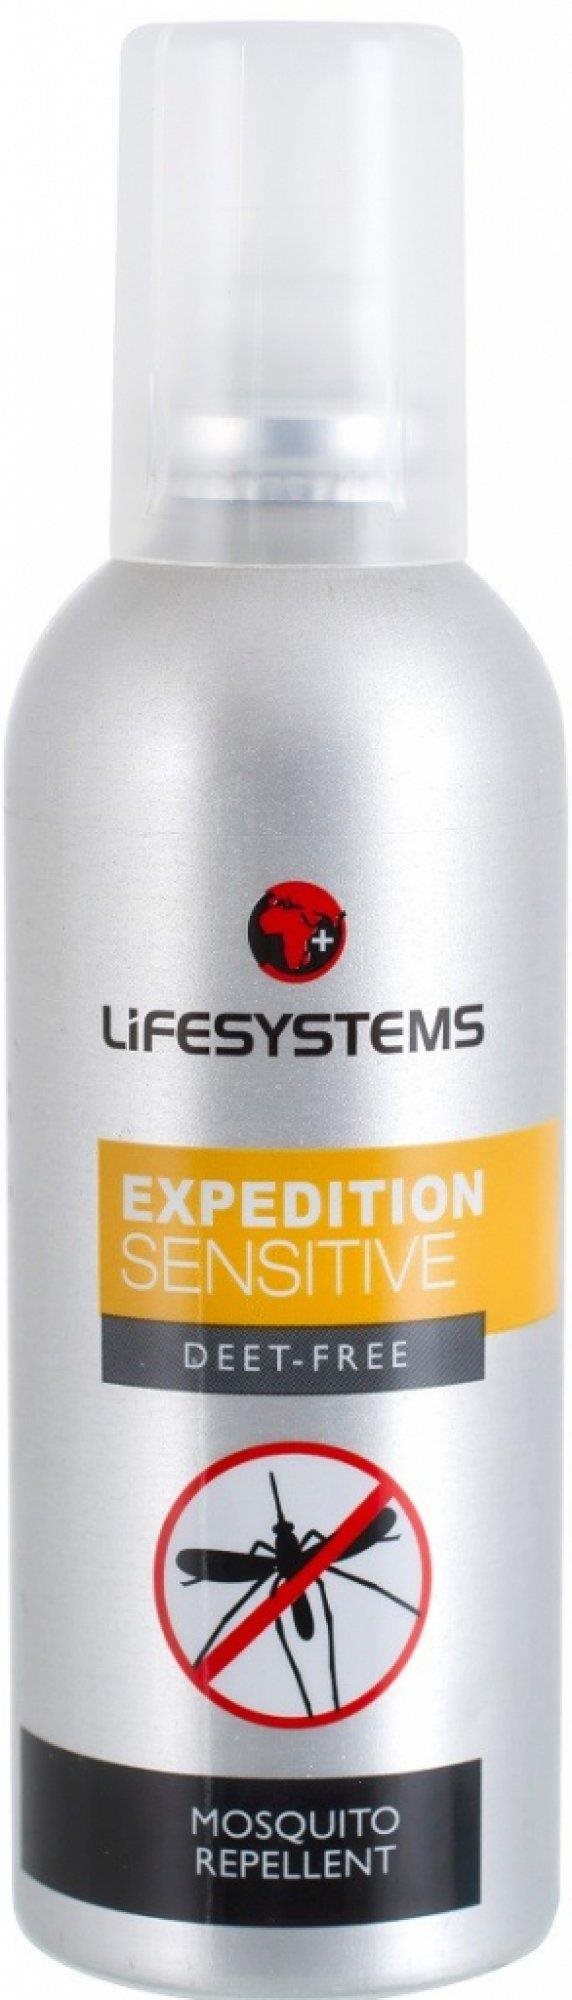 LIFESYSTEMS Expedition Sensitive 100 ml